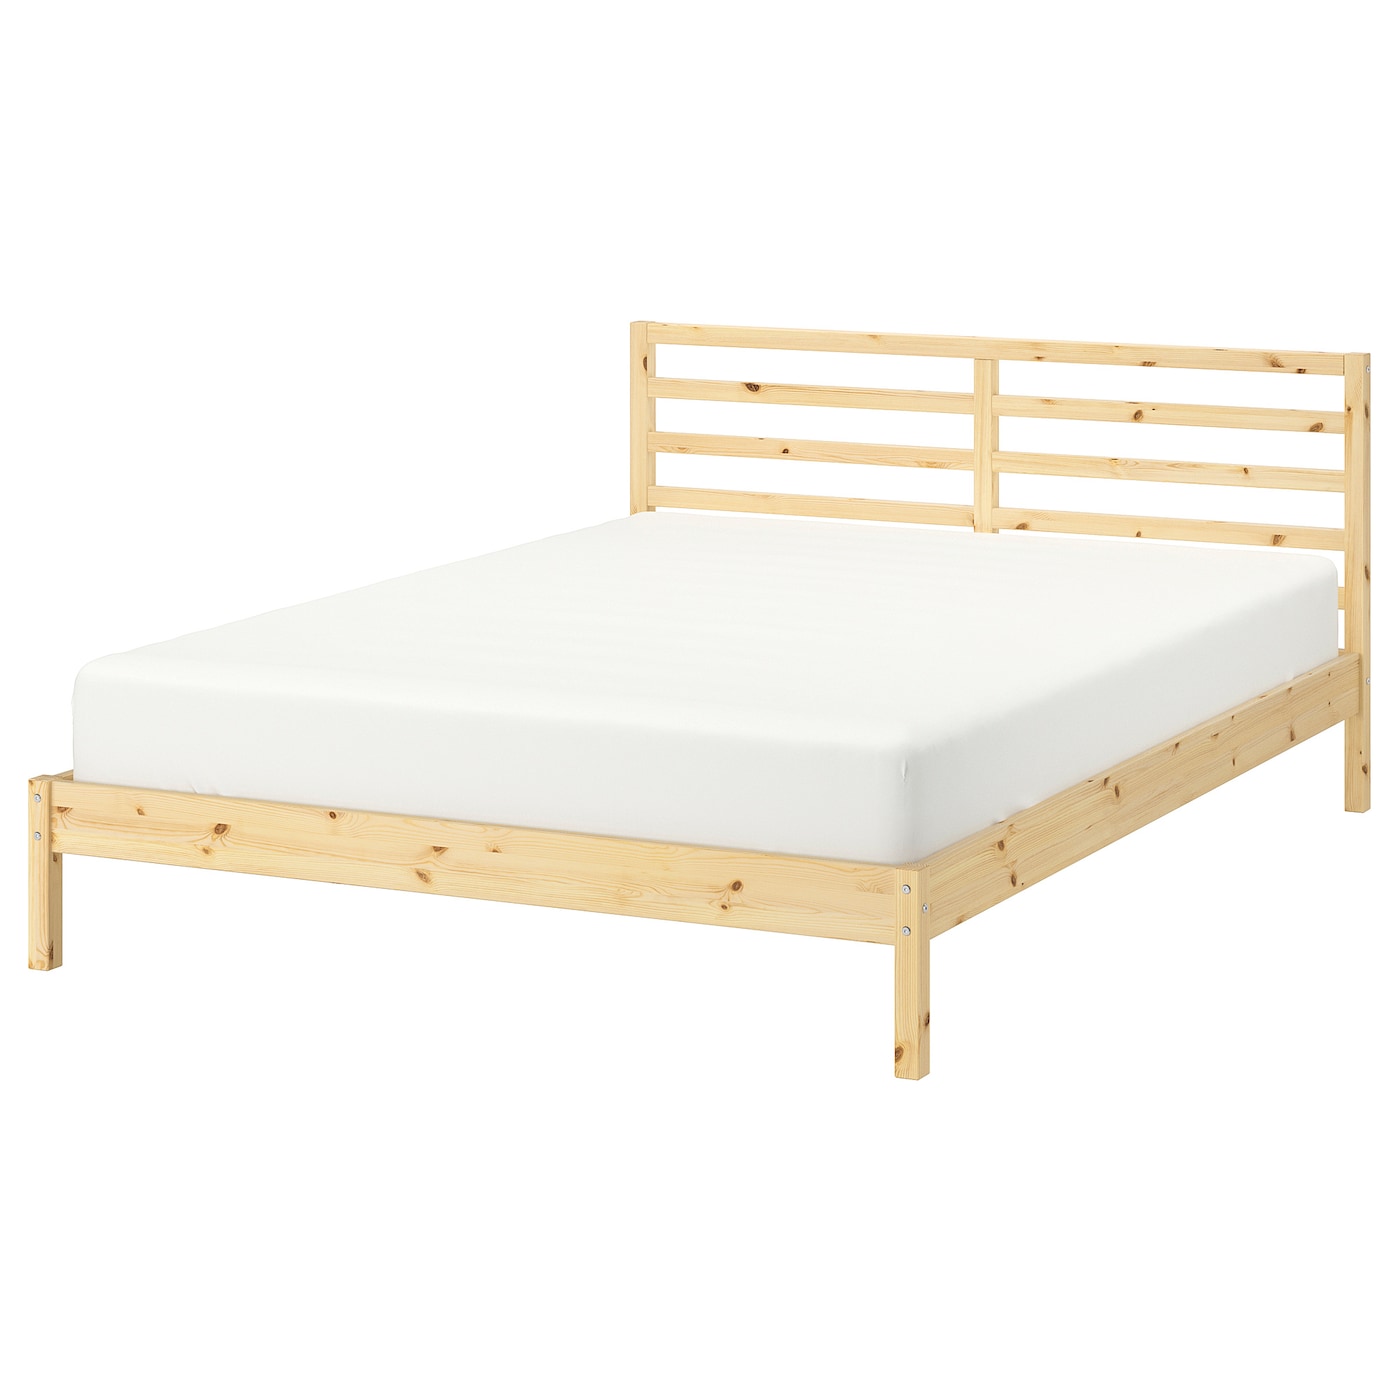 Каркас кровати - IKEA TARVA, 200х140 см, сосна, ТАРВА ИКЕА